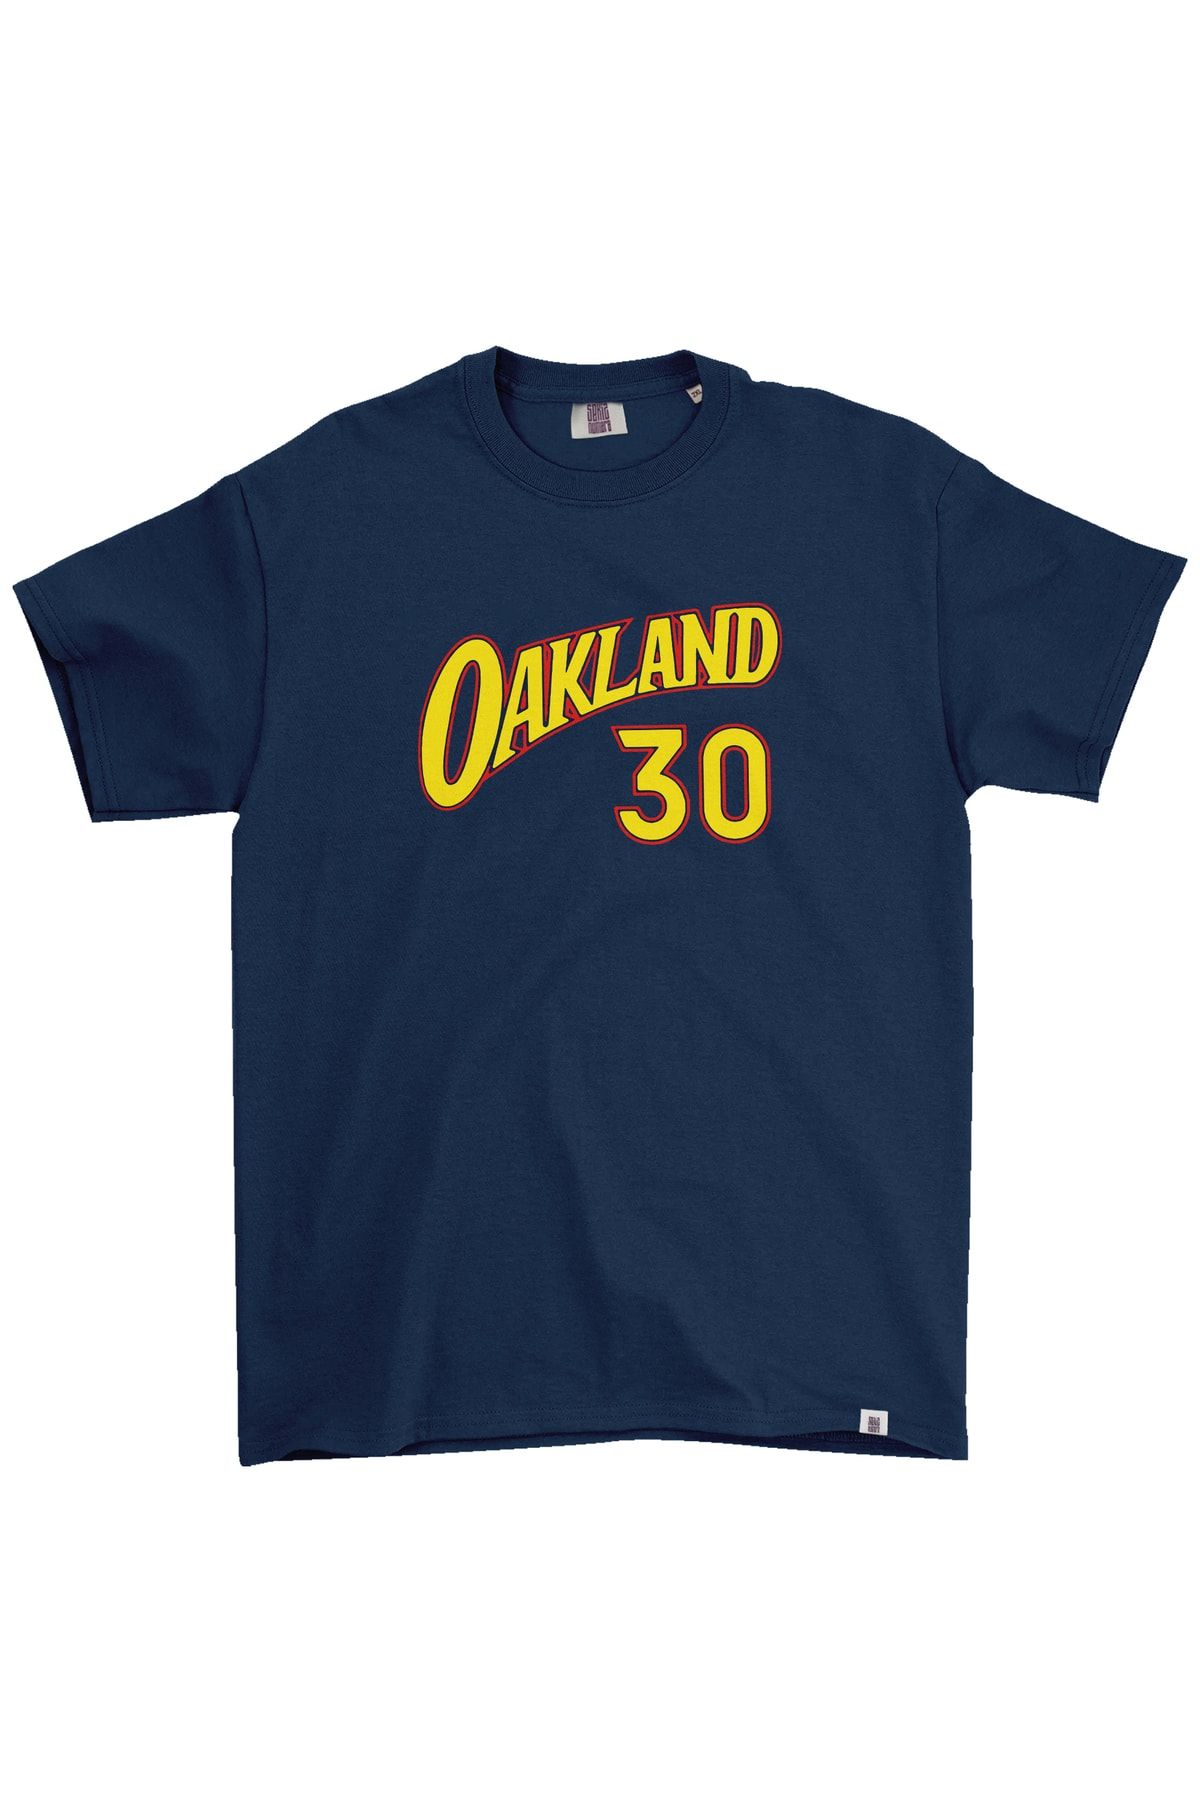 Sekiz Numara Stephen Curry Oakland 30 Tişört